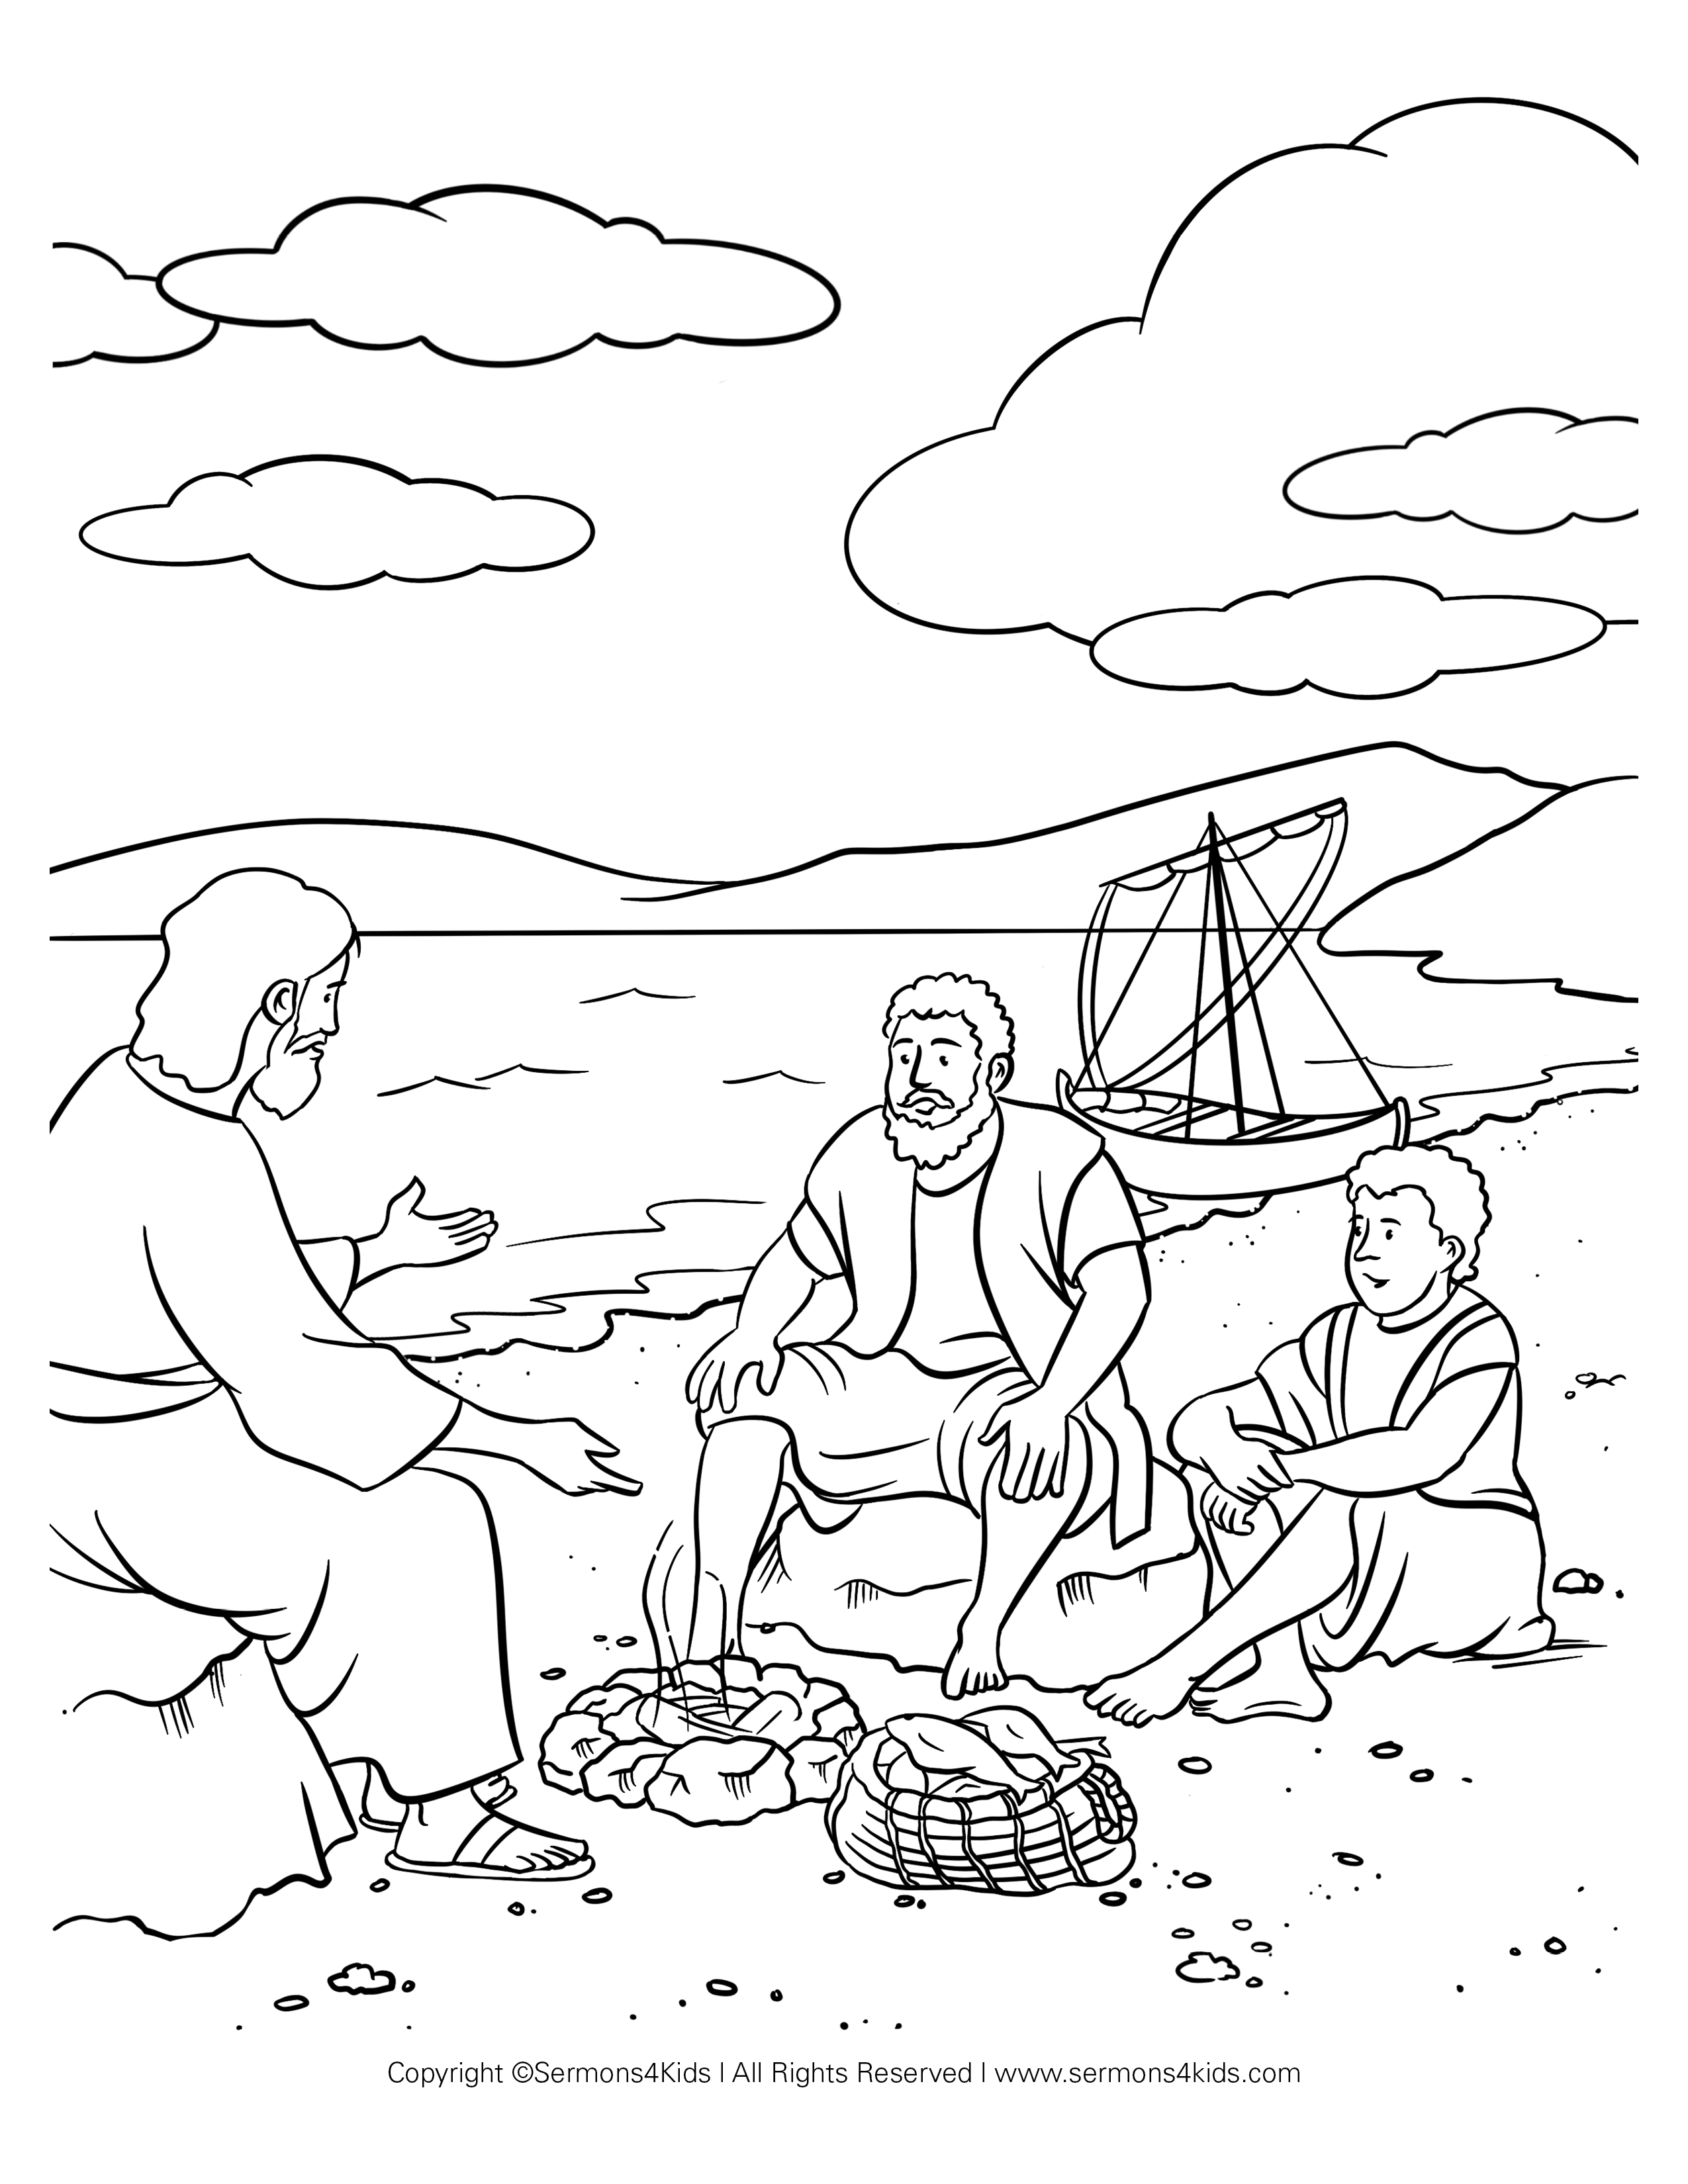 Fishing for People (Matthew) Coloring Page | Sermons4Ki...